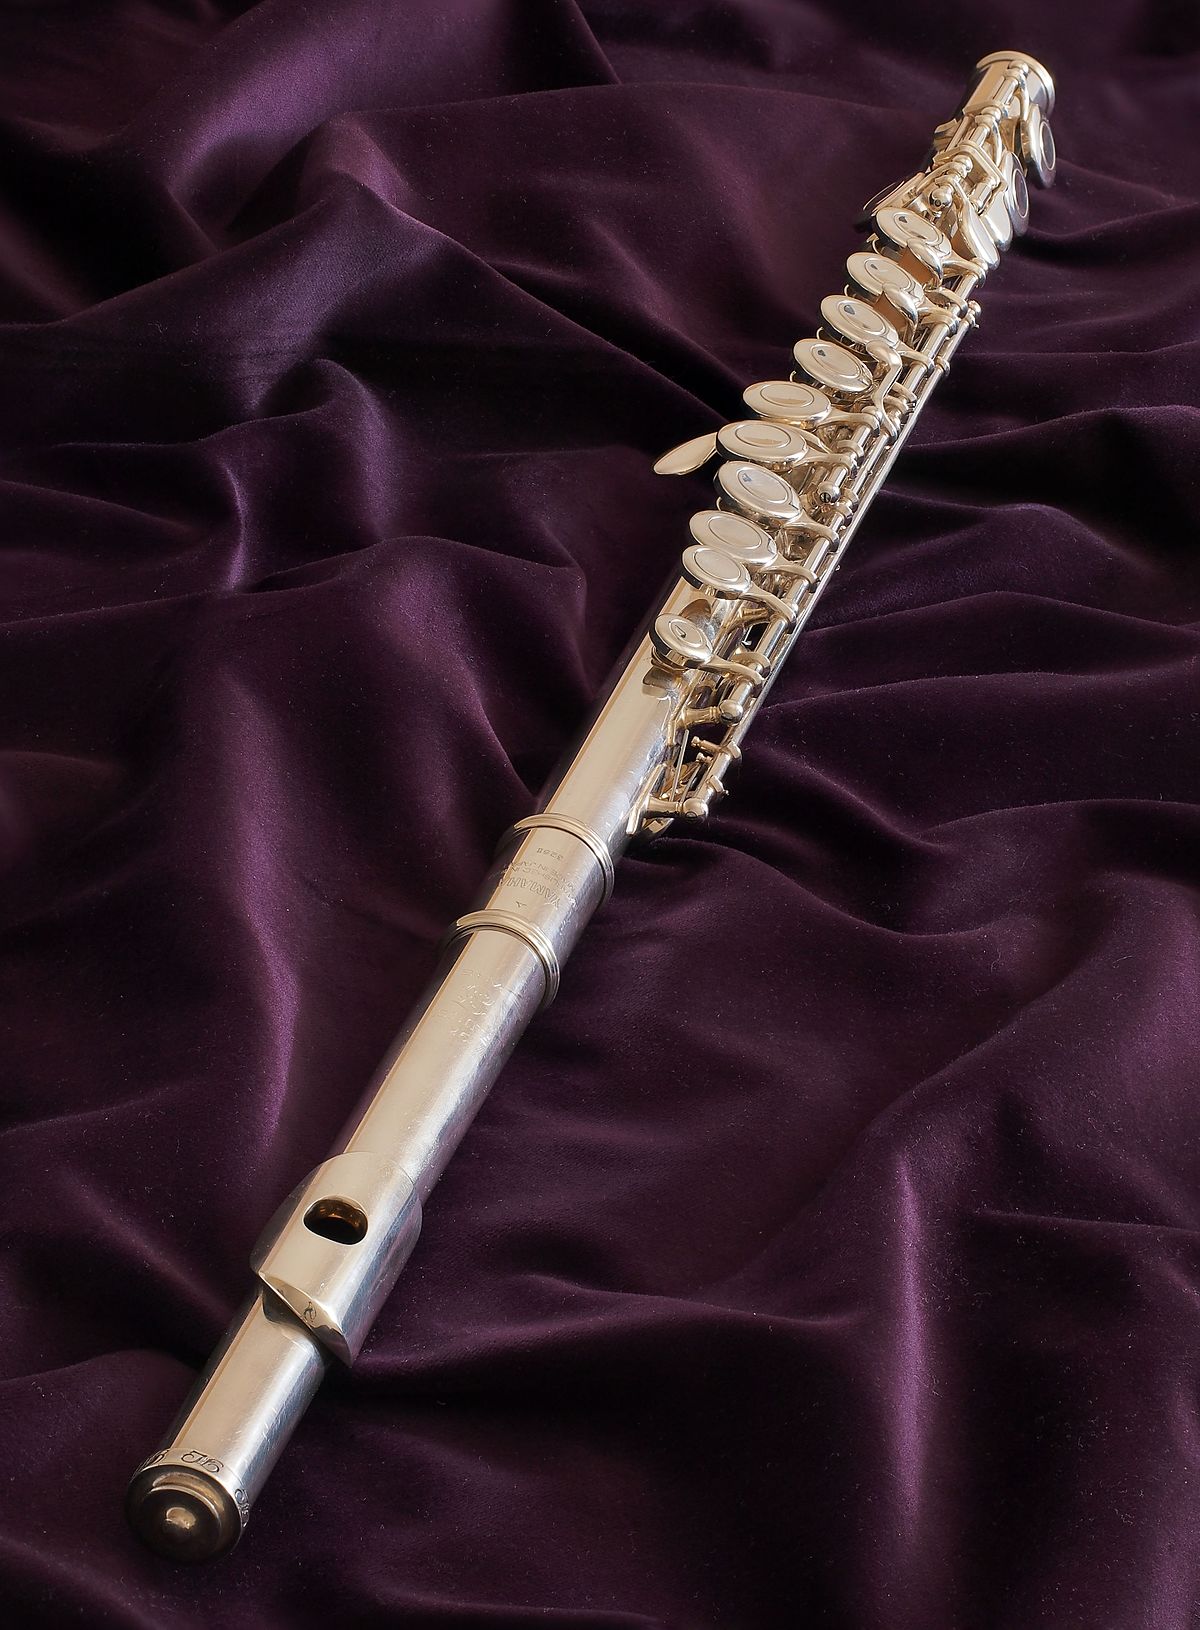 Western concert flute - Wikipedia